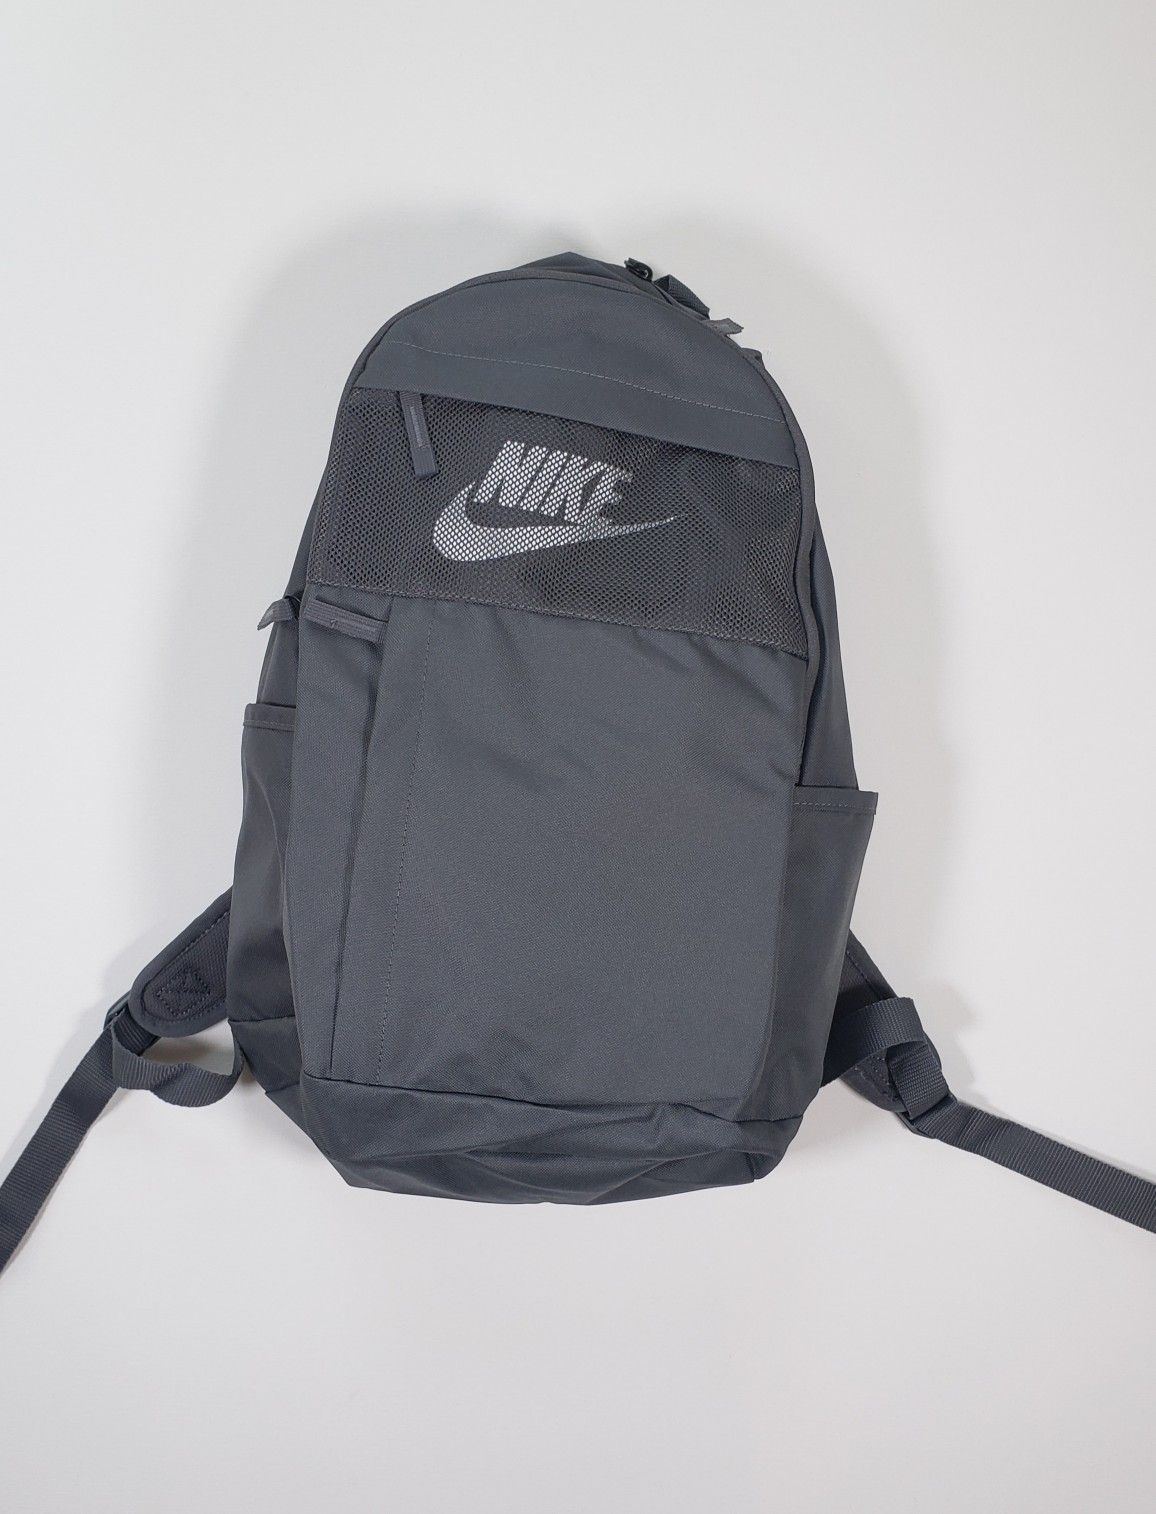 Nike Elemental LBR Backpack